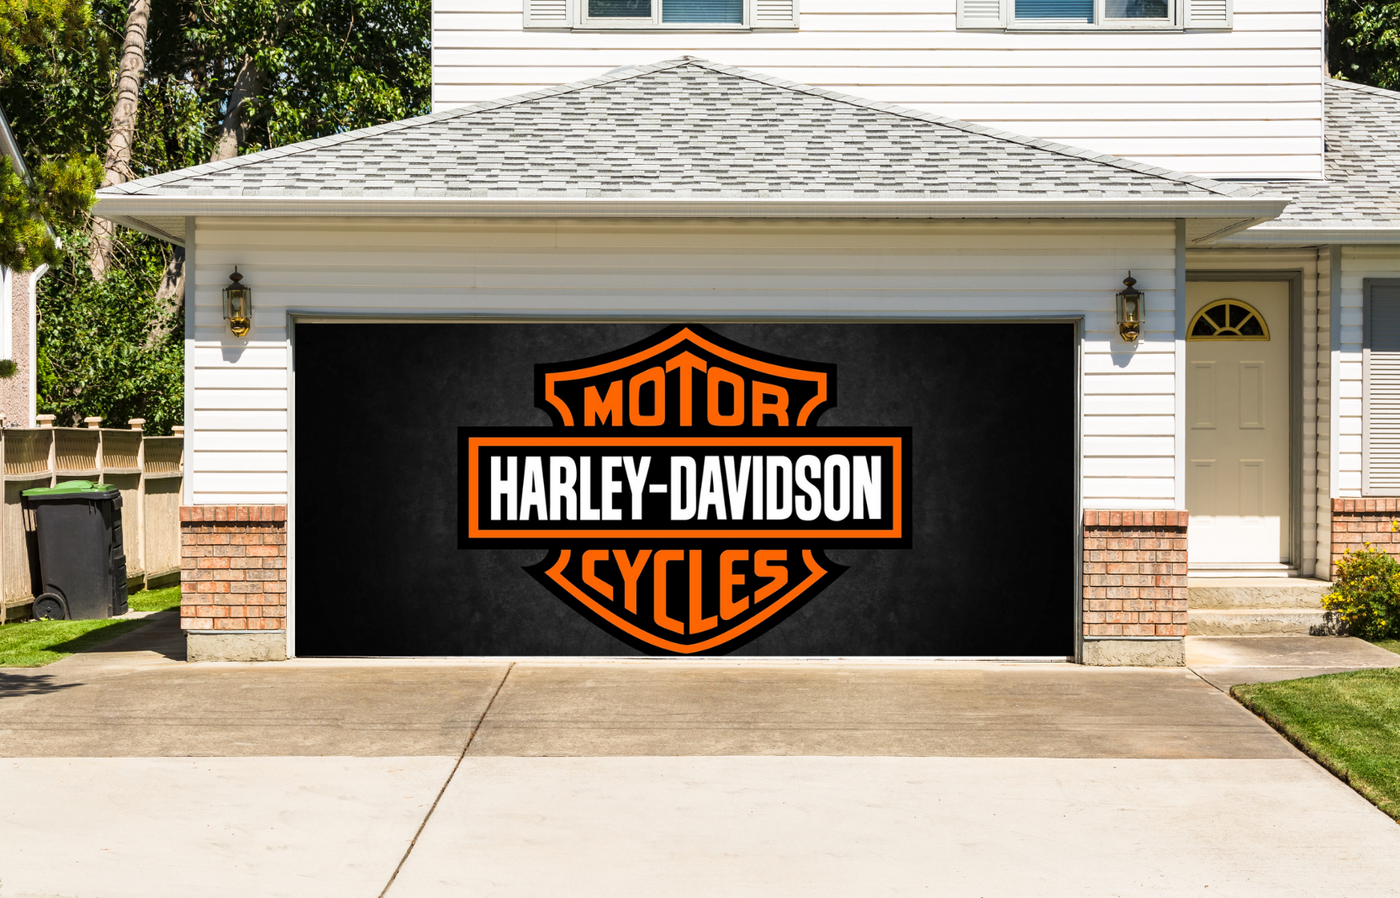 Harley Davidson Motor Cycles Garage Door Cover Banner Wrap